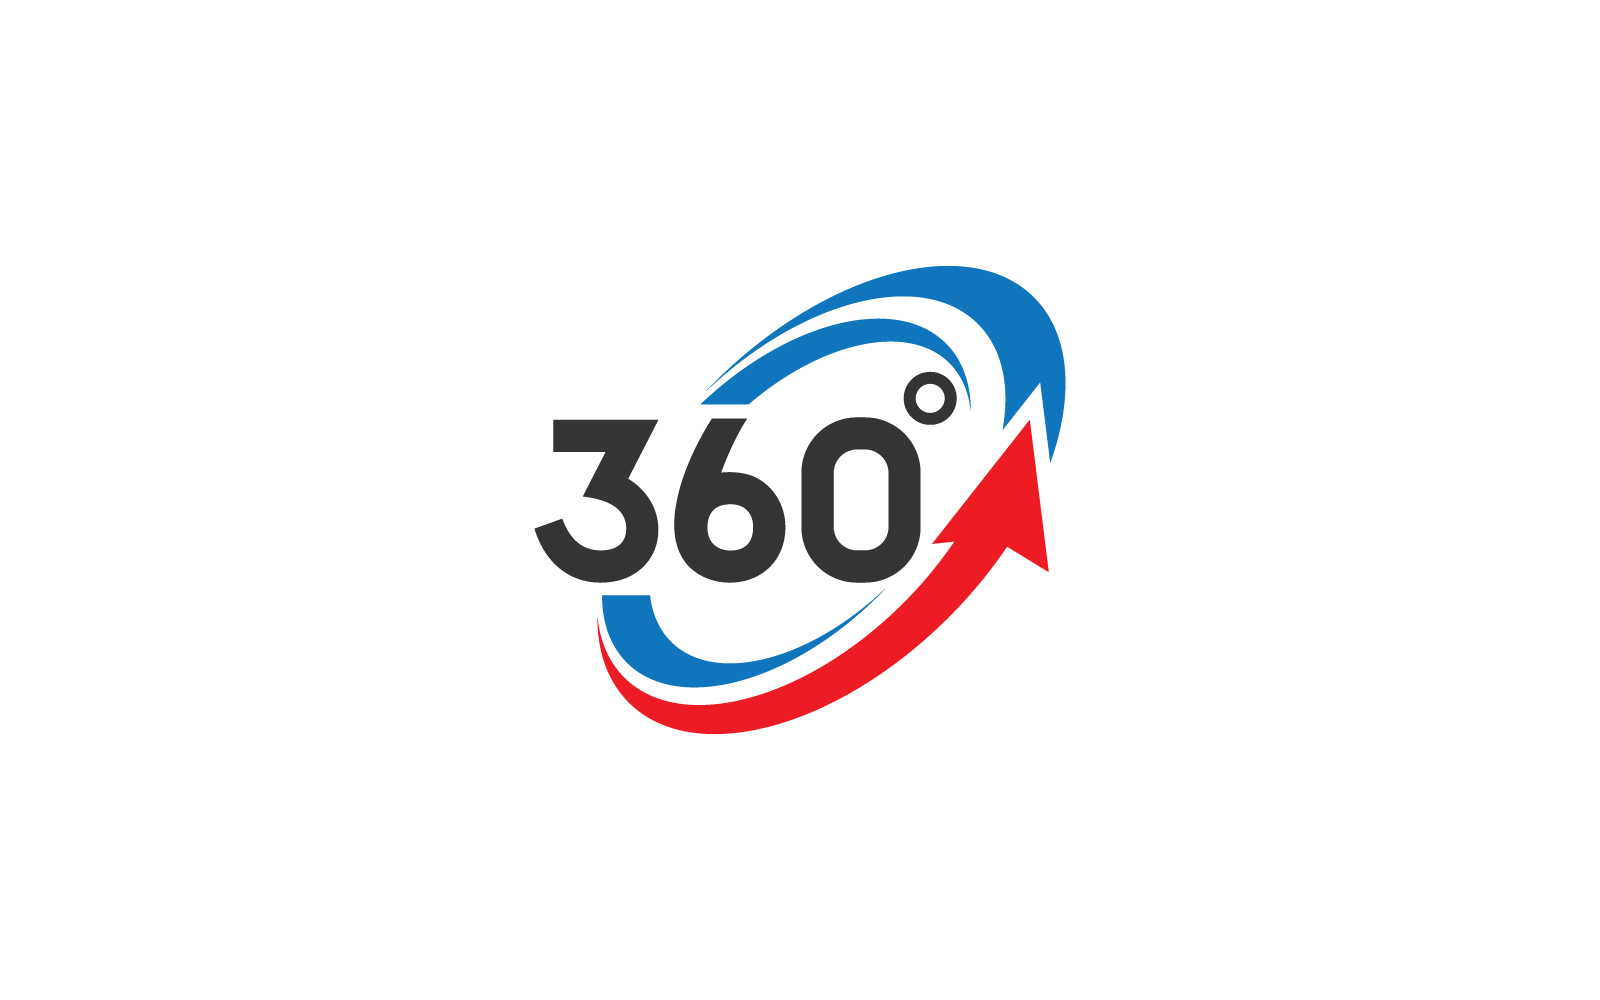 360 degrees creative line logo icon Royalty Free Vector